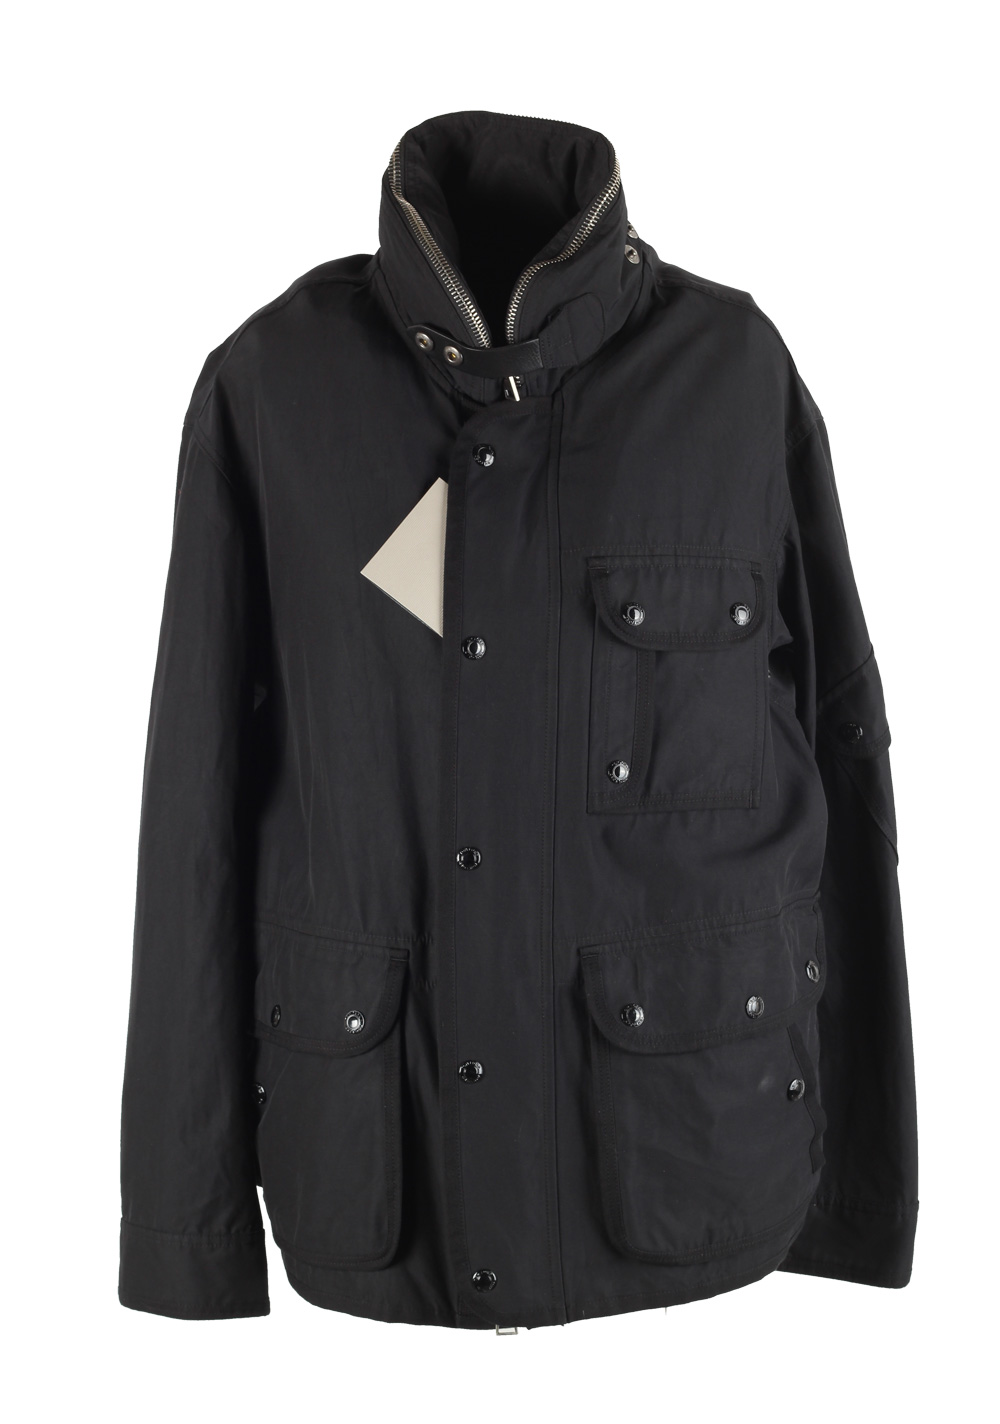 TOM FORD Black Zipper Jacket Coat Size 48 / 38 U.S. Outerwear | Costume ...